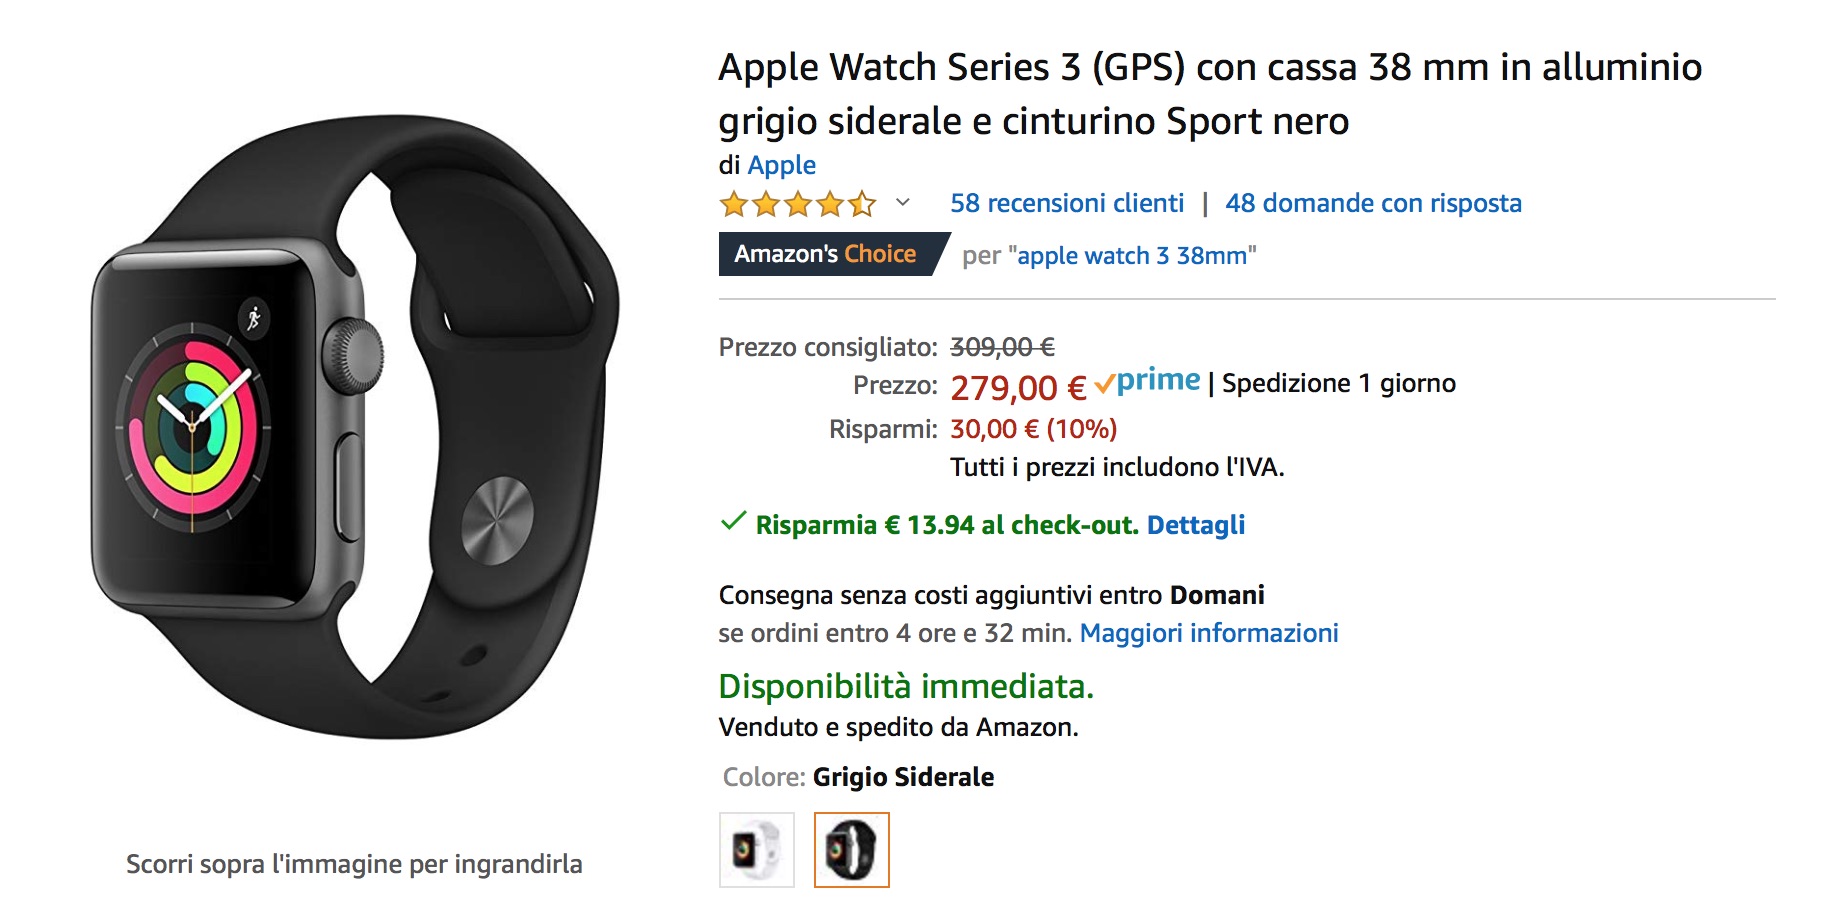 Rbatevi un Apple Watch 3: su Amazon è scontato a 279 €